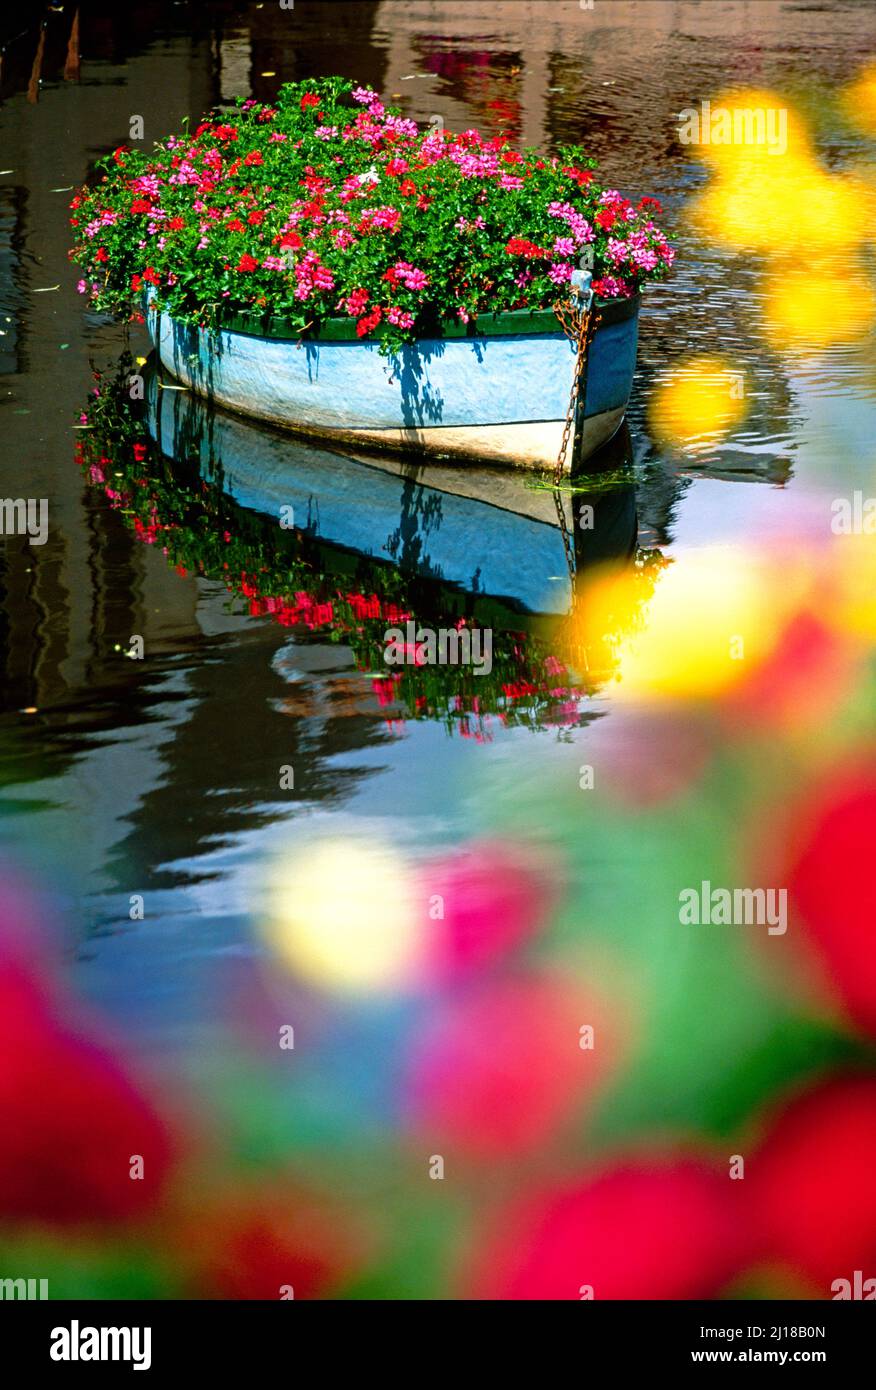 flower boat, on river, hydrangeas, Stock Photo